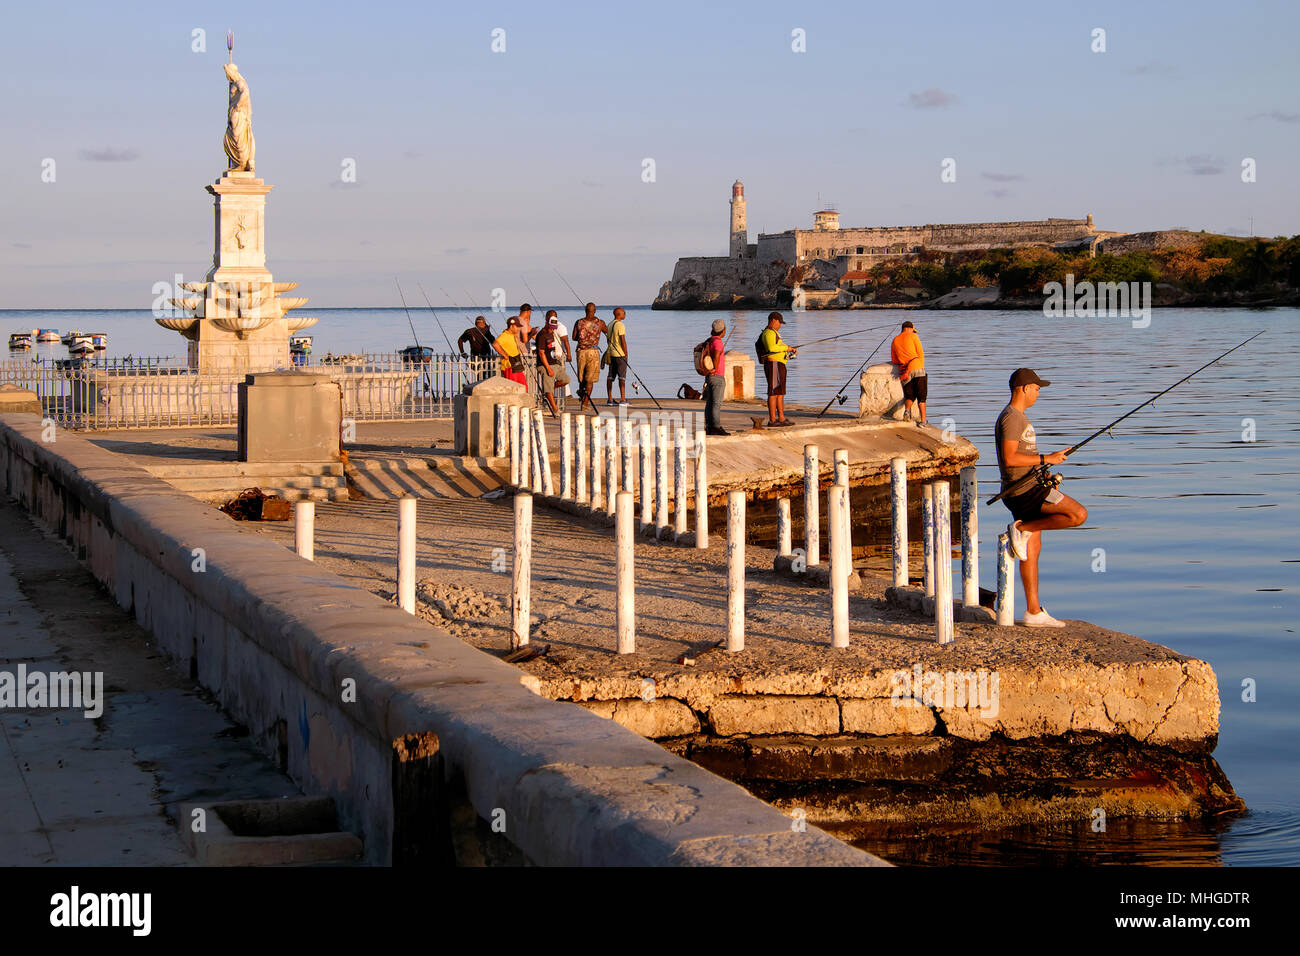 Angeln neben einem Neptunbrunnen mit Castillo De Los Tres Reyes del Morro im Hintergrund das Schloss, Malecon/Avenida del Puerto, Havanna, Kuba Stockfoto